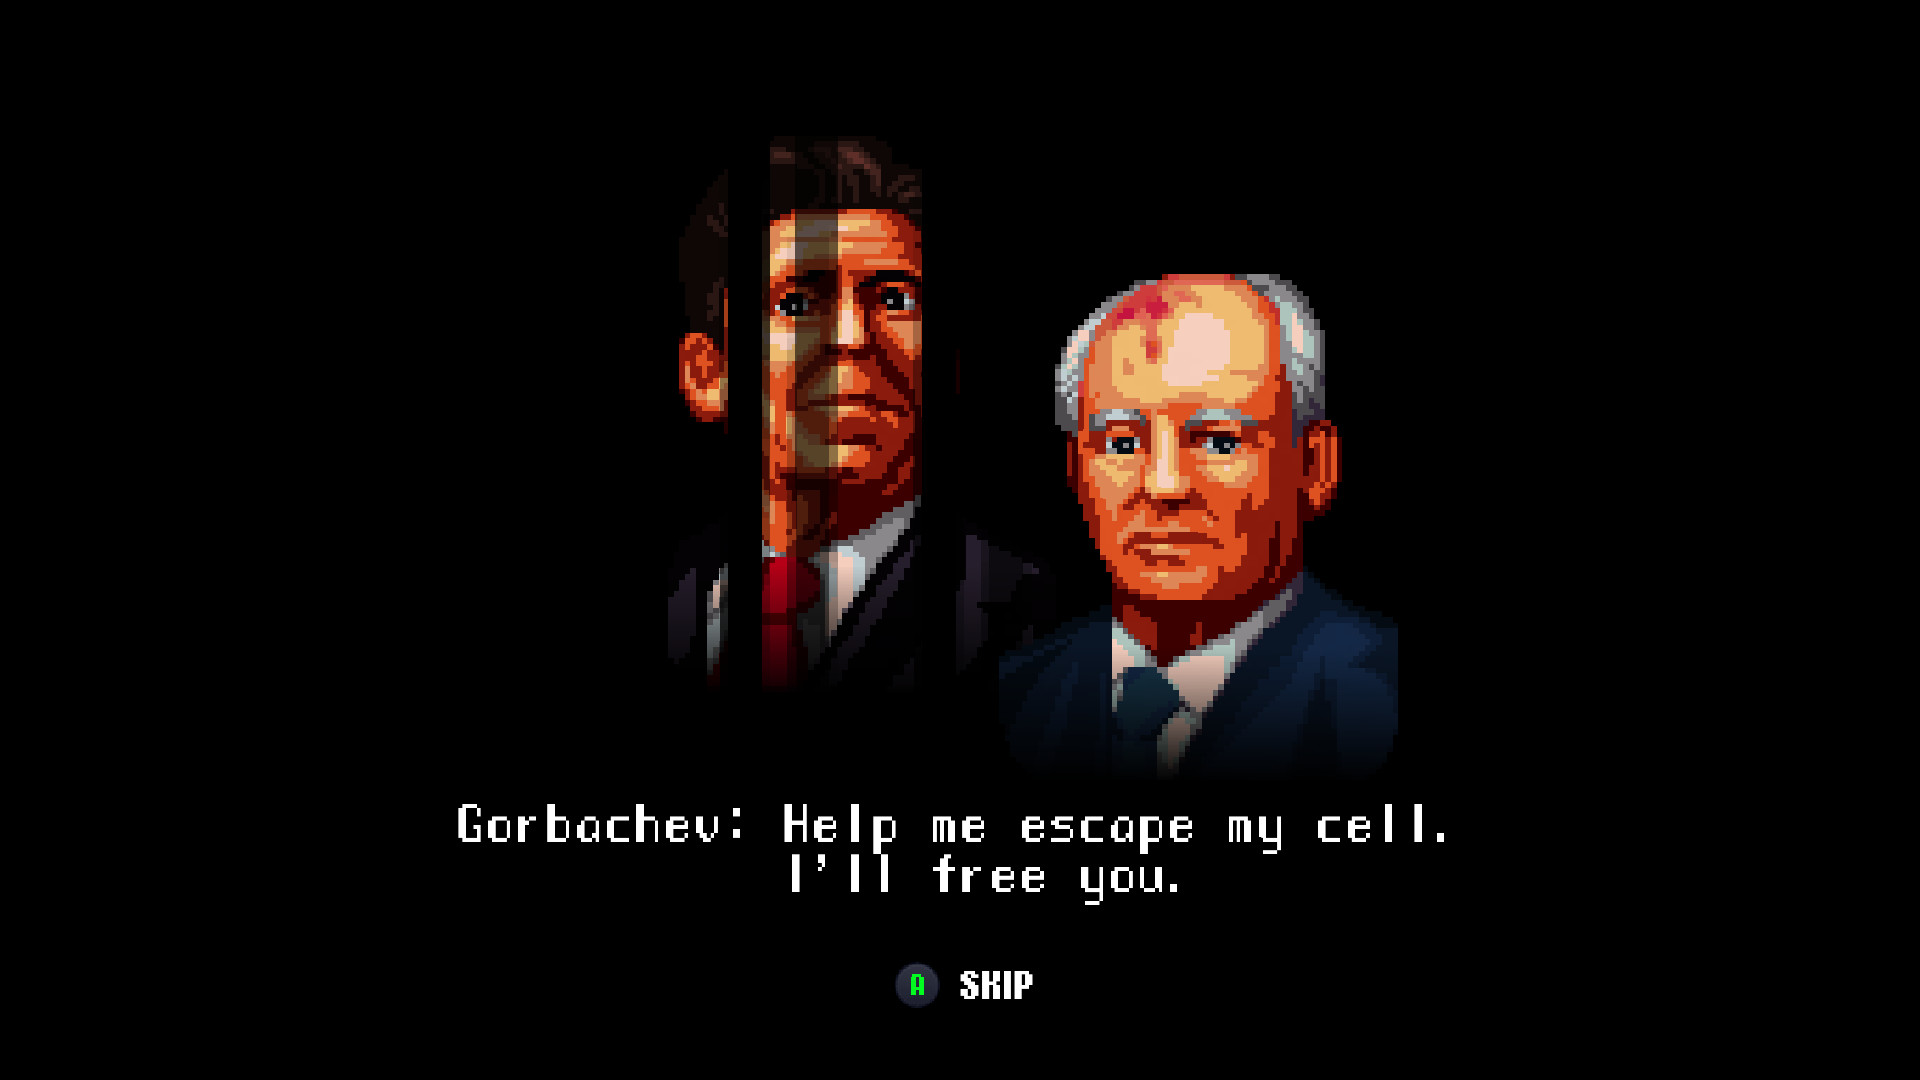 Reagan Gorbachev screenshot 6155